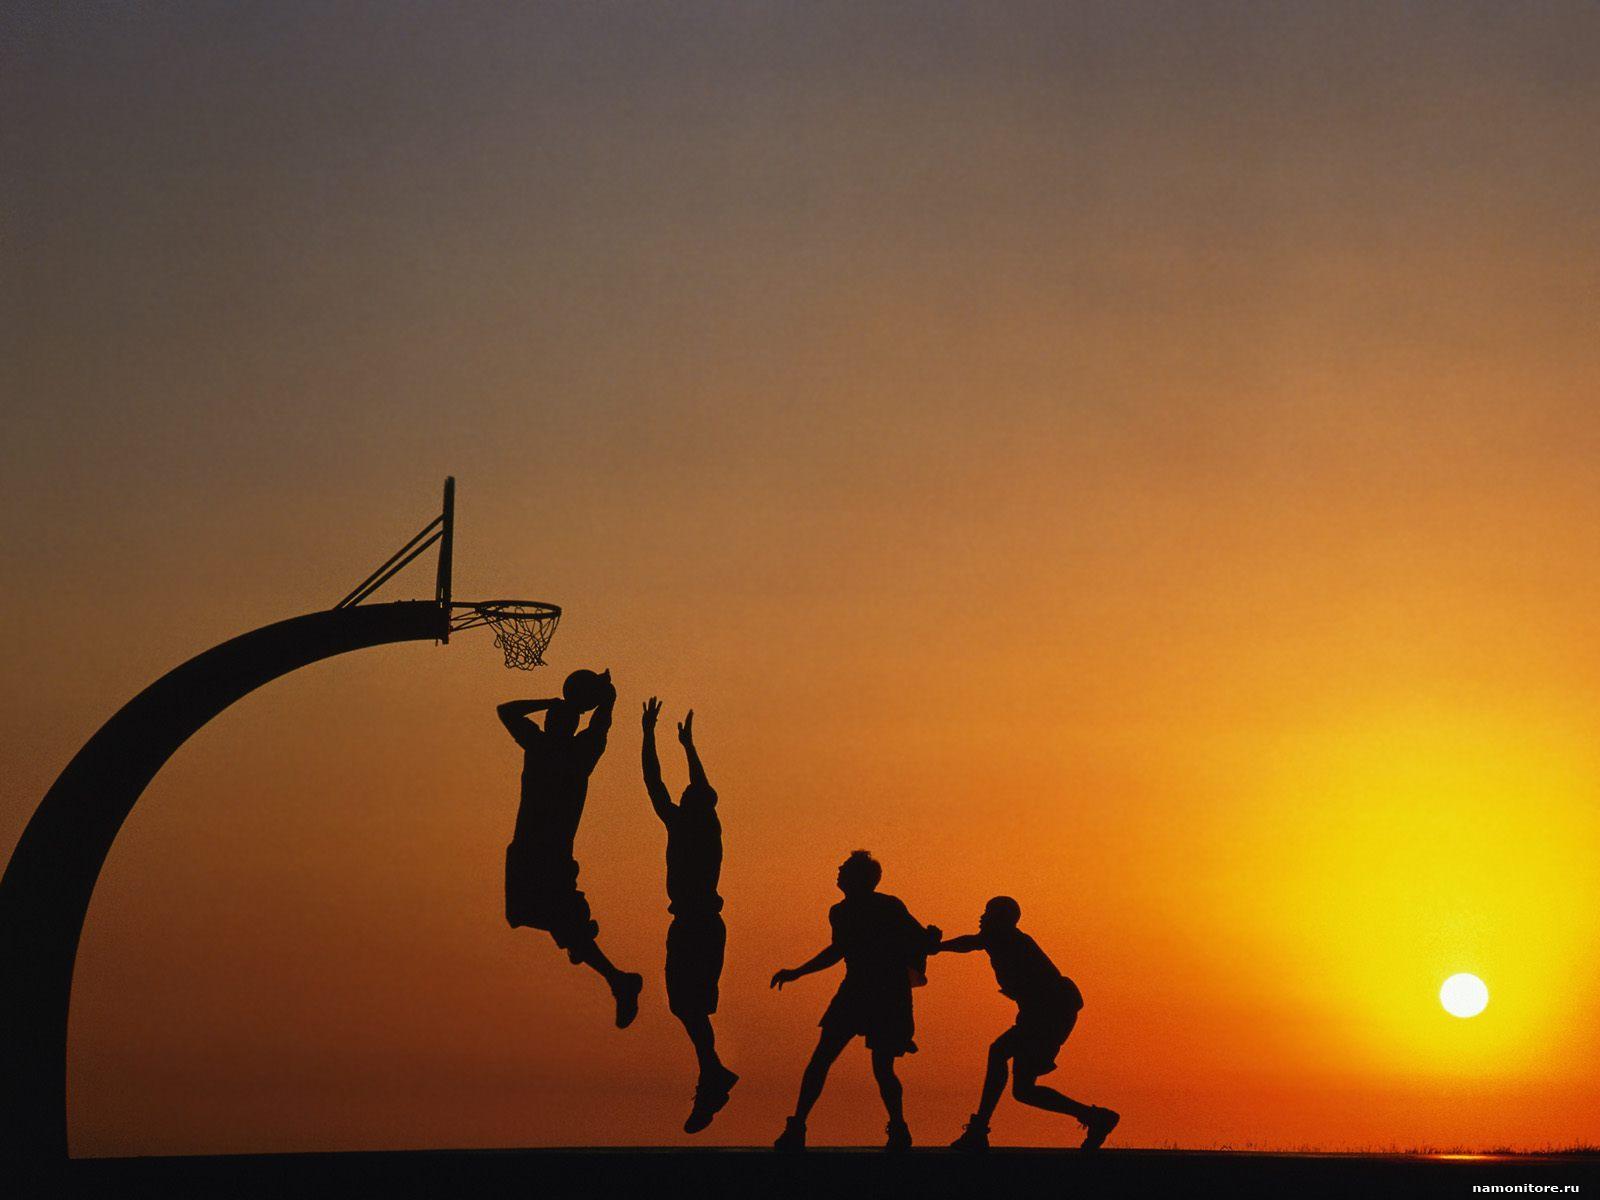 Download wallpaper: Basketball, desktop wallpaper, photo